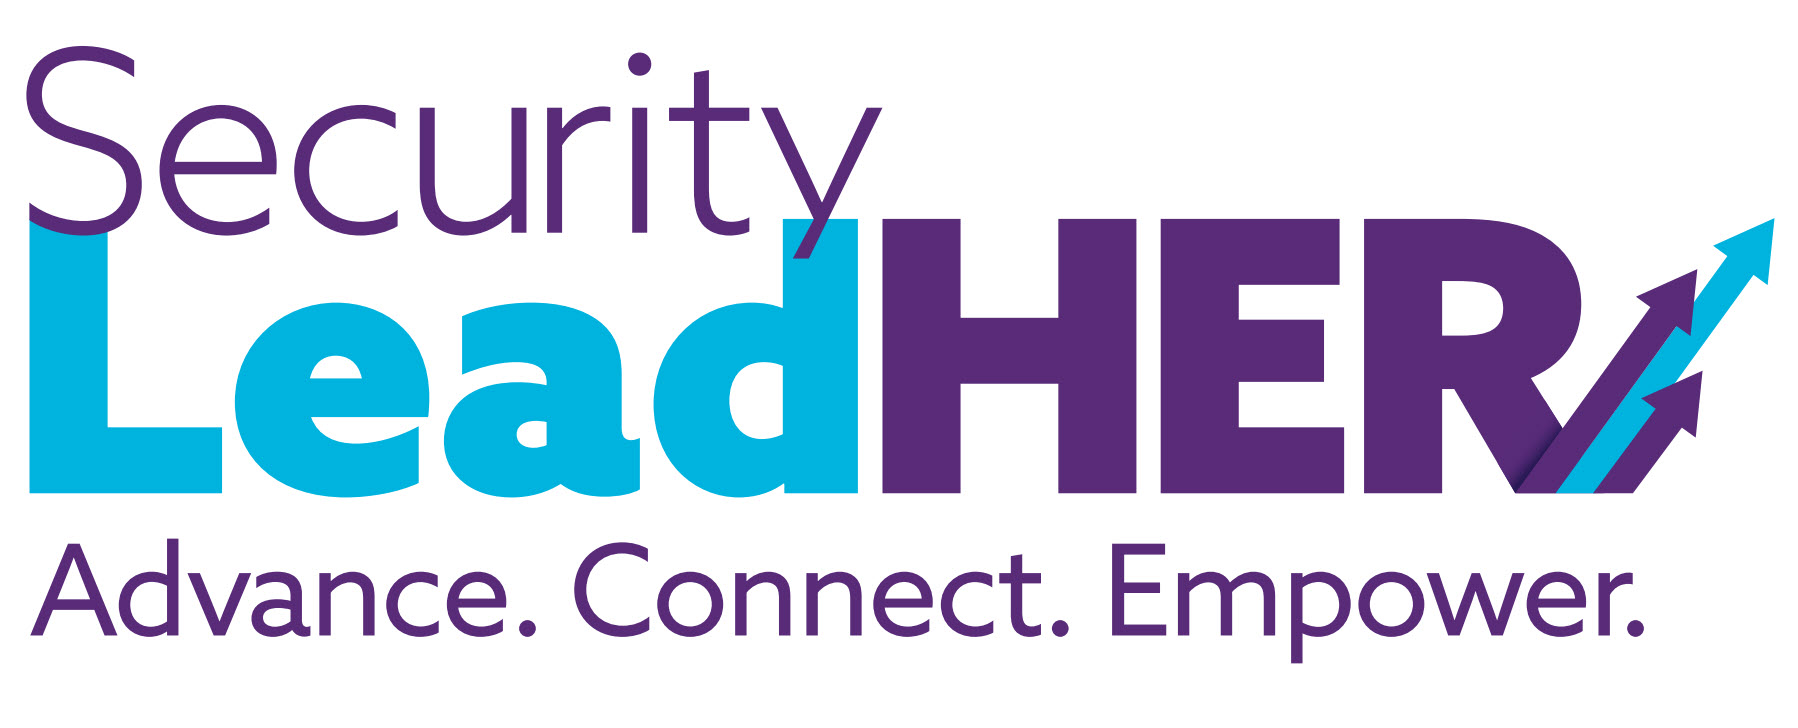 security leadher logo.jpg